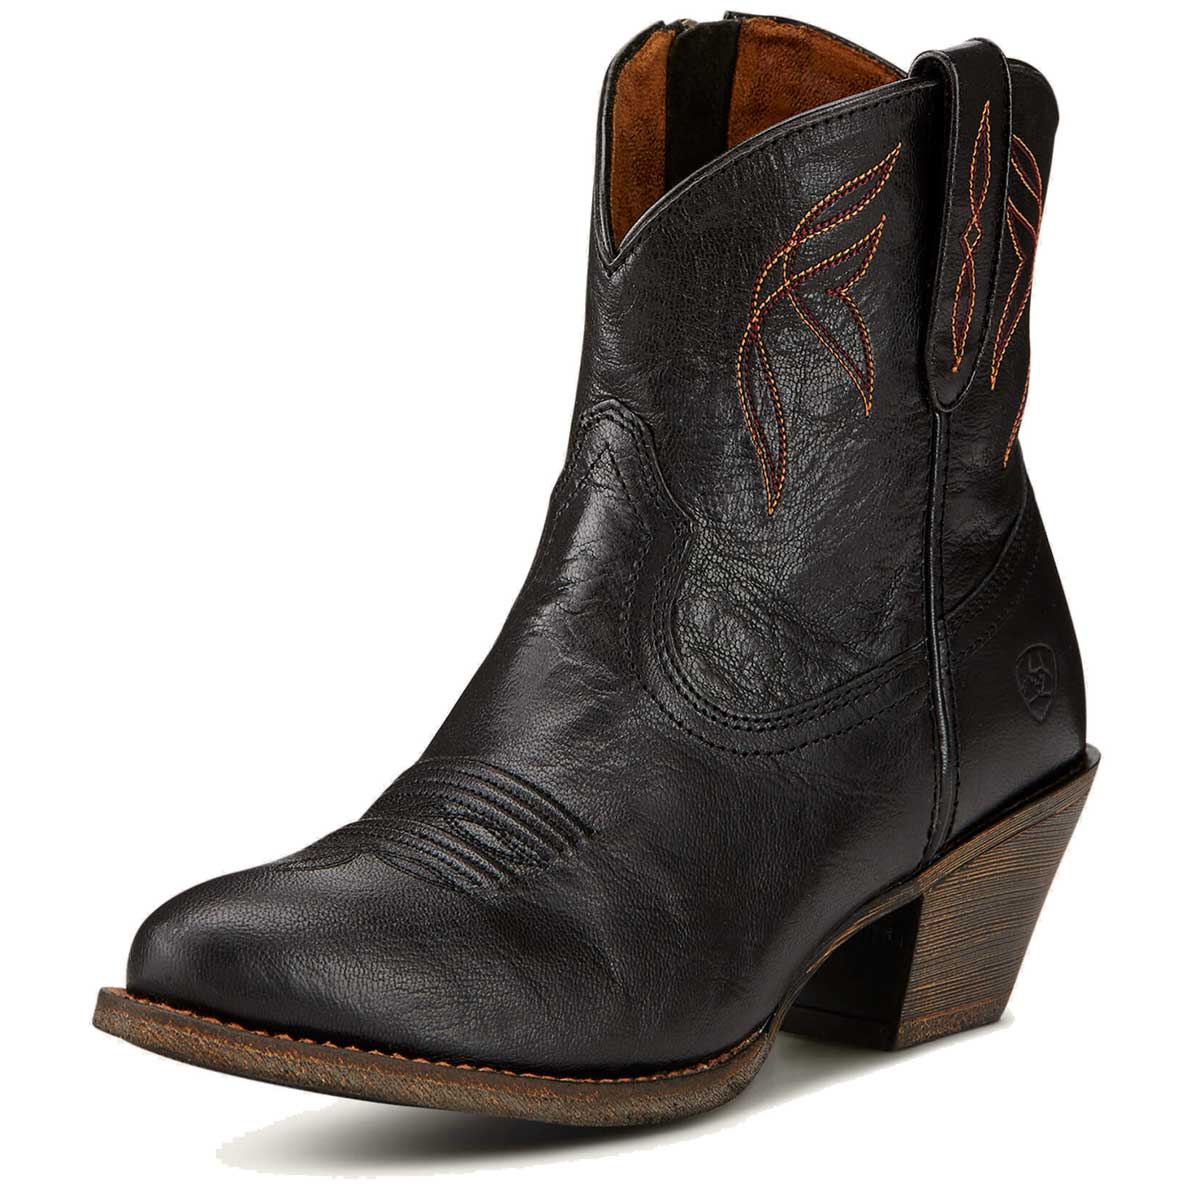 ARIAT Darlin Western Boots - Womens - Old Black